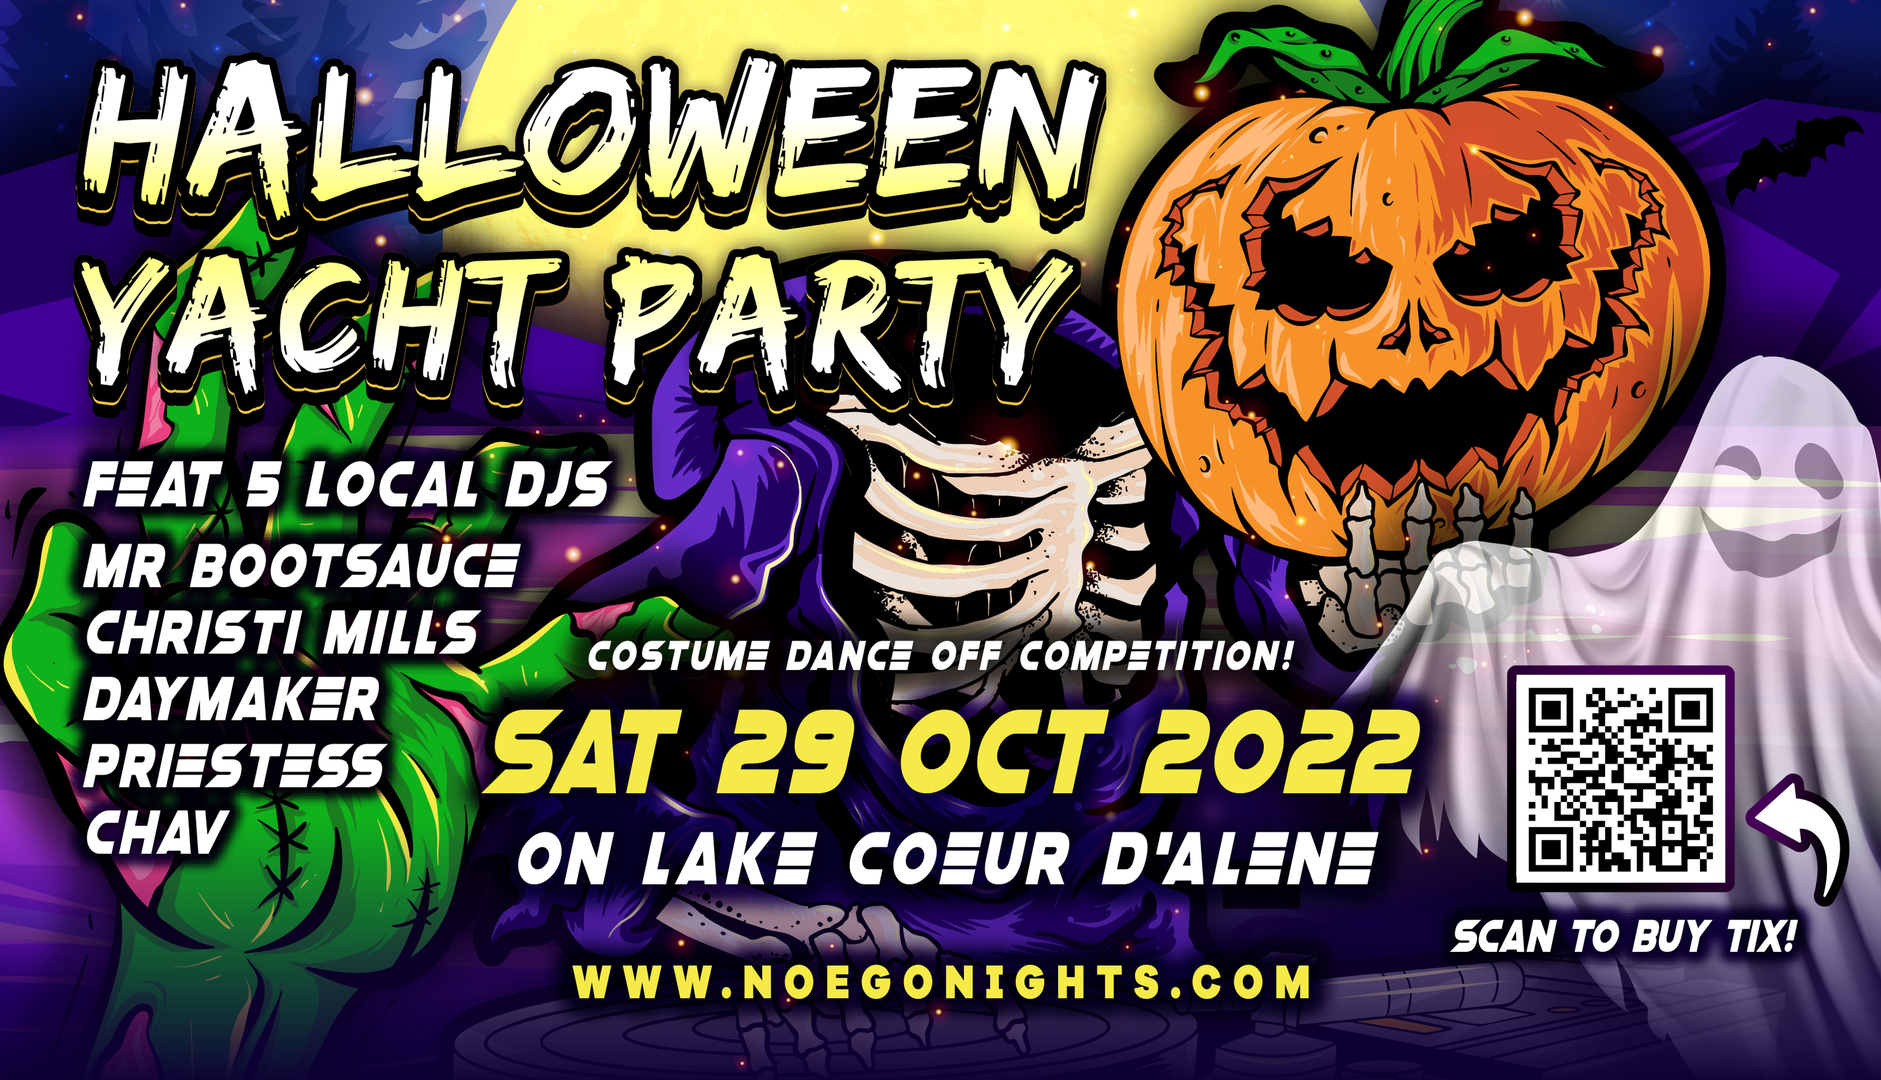 Halloween Yacht Party - No Ego Nights, Coeur d'Alene, Idaho, United States